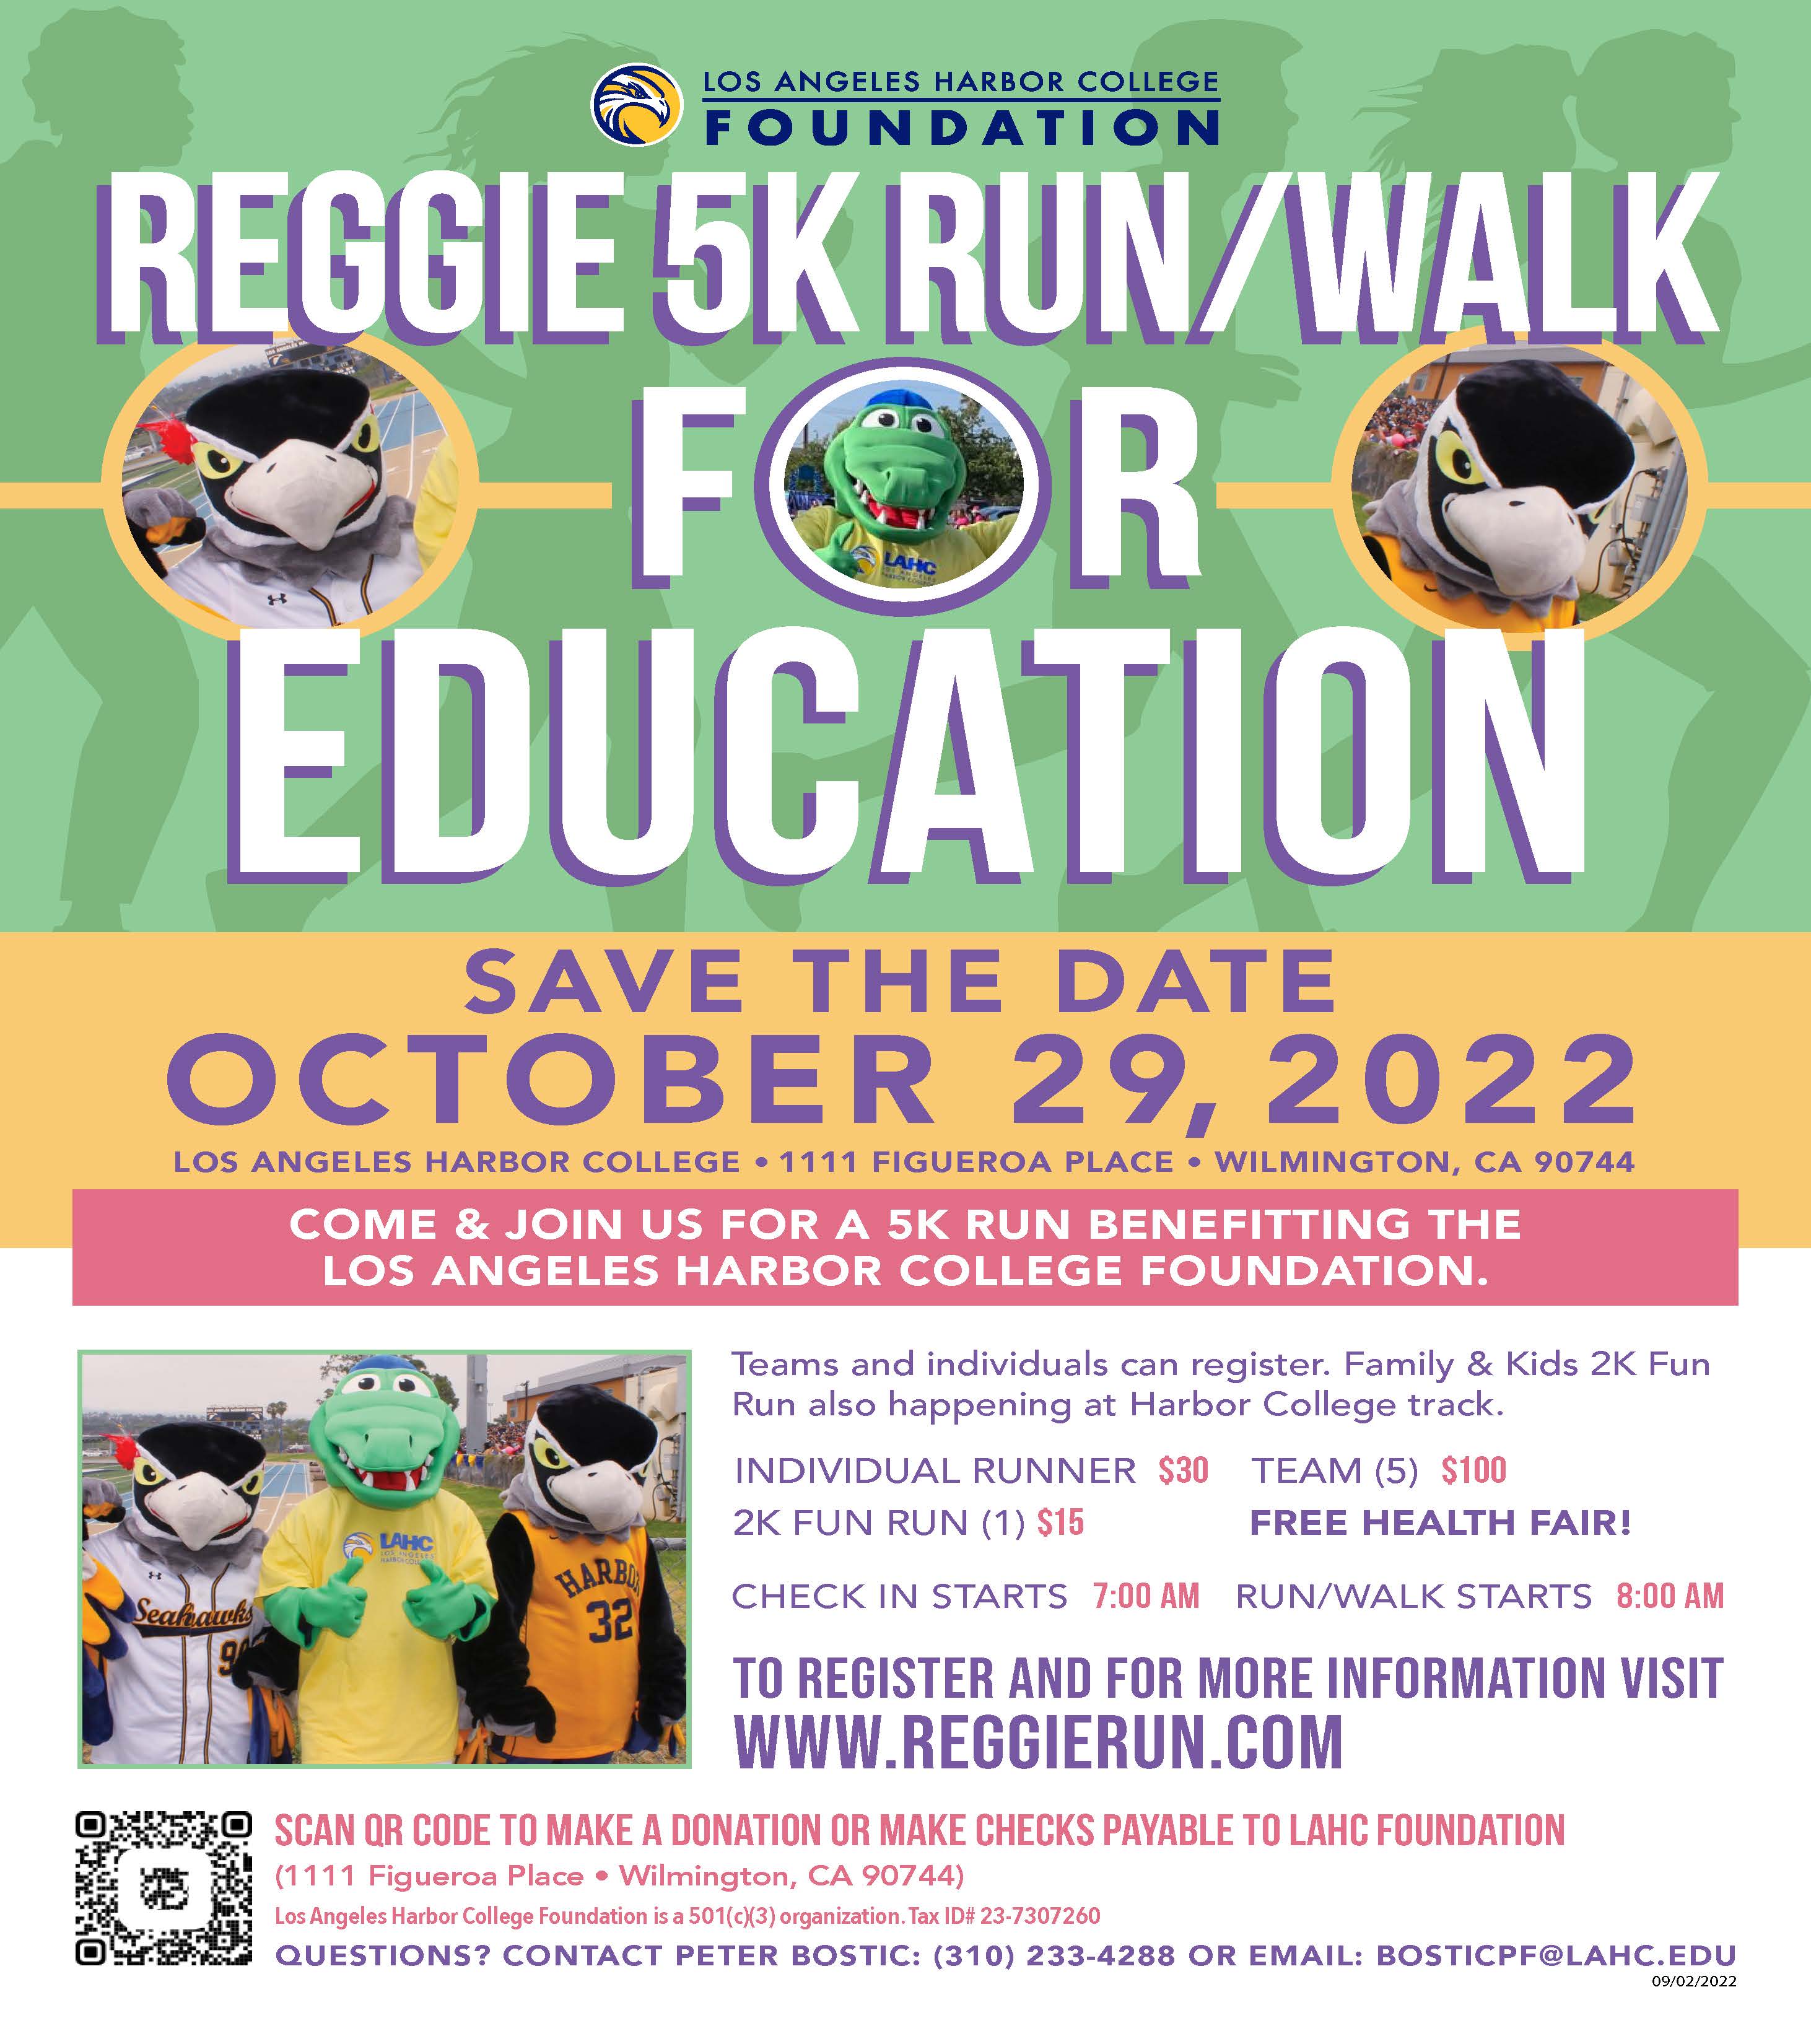 Reggie 5K Run/Walk For Education - Save the Date, October 29, 2022 - https://www.reggierun.com/